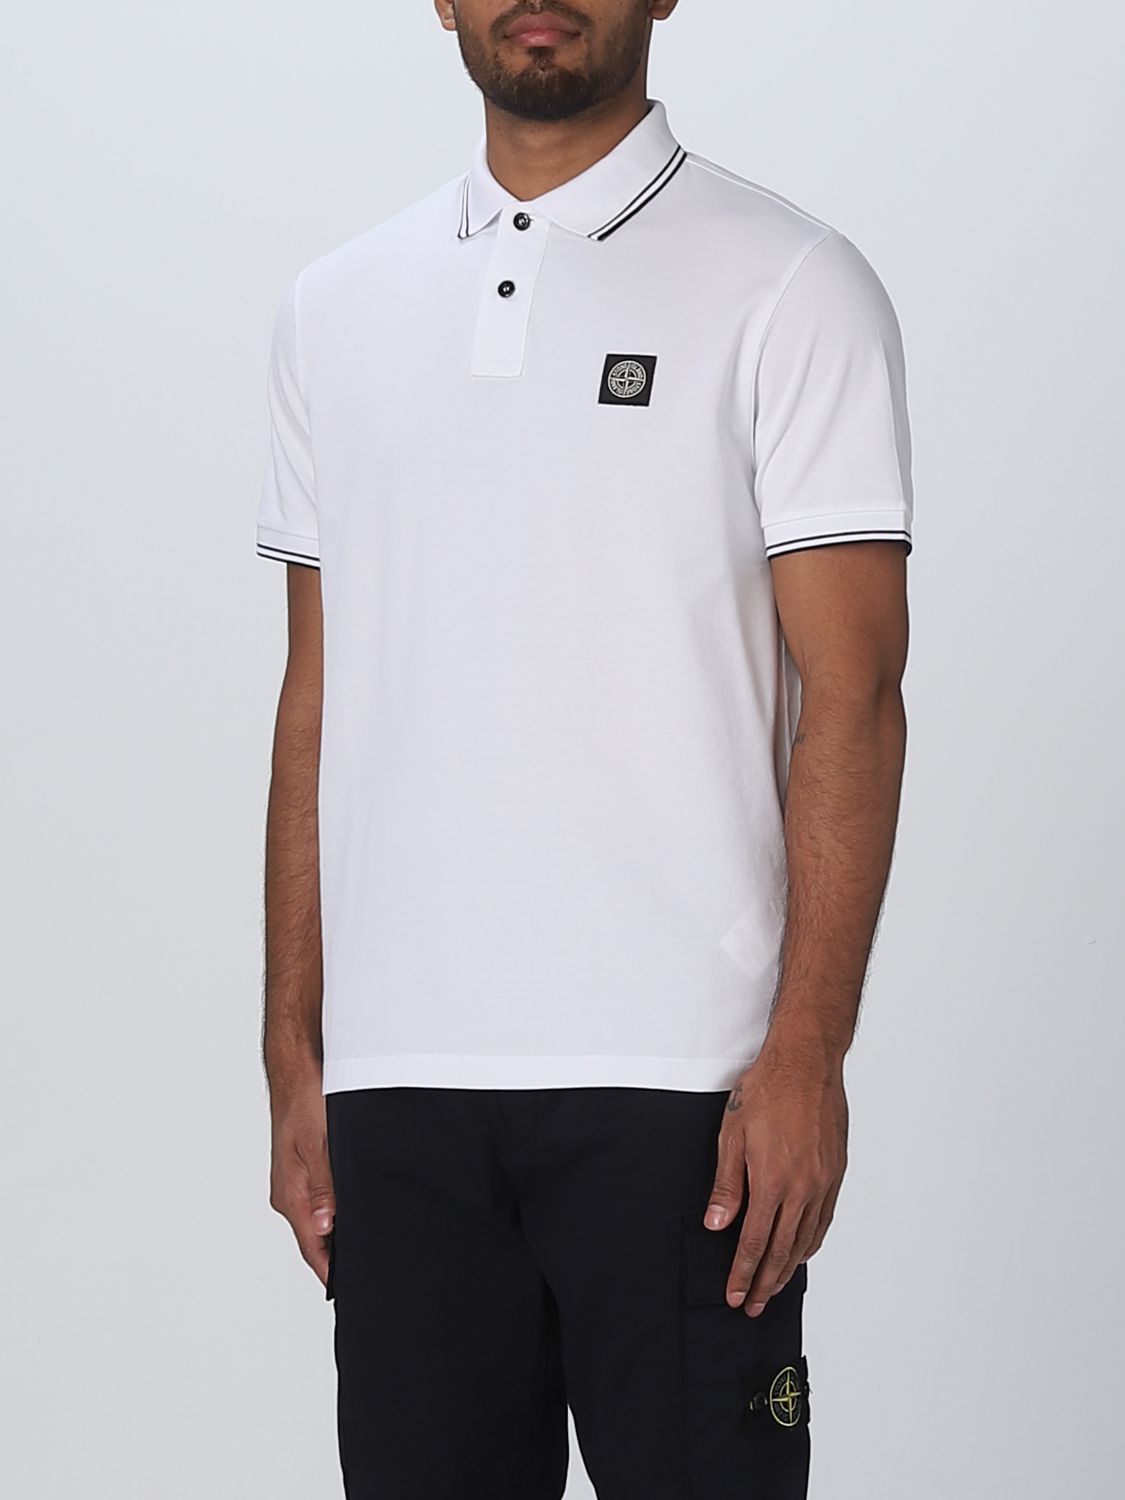 Rekvisitter Mose Skalk STONE ISLAND: polo shirt for man - White | Stone Island polo shirt  10152SC18 online on GIGLIO.COM